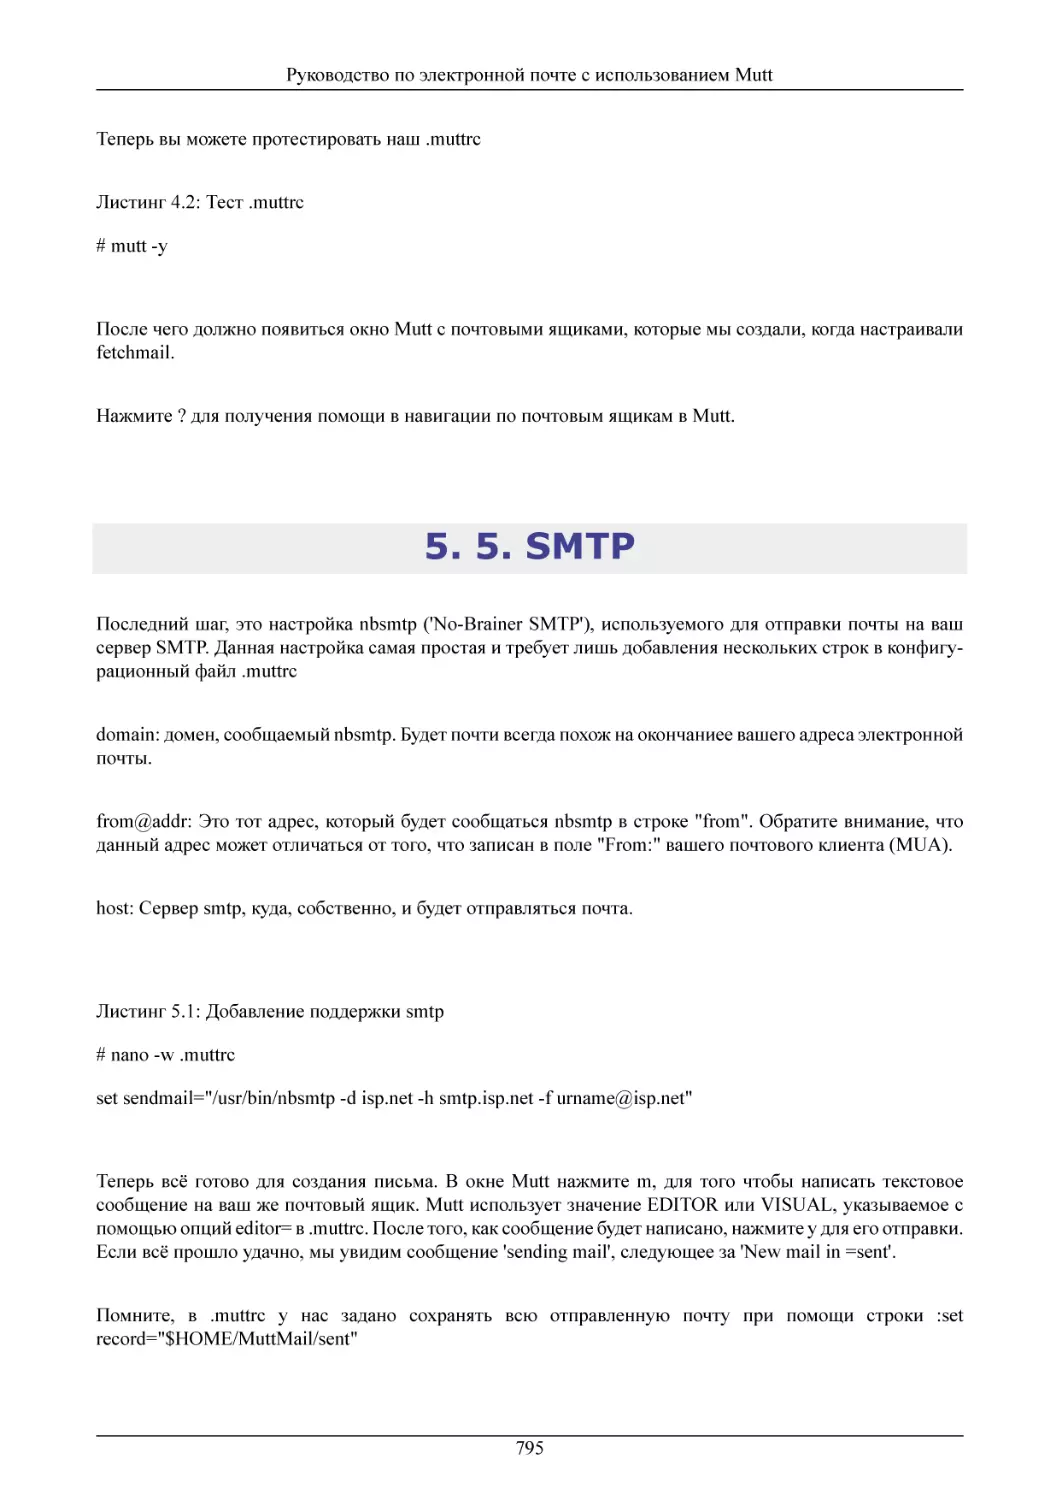 5. SMTP